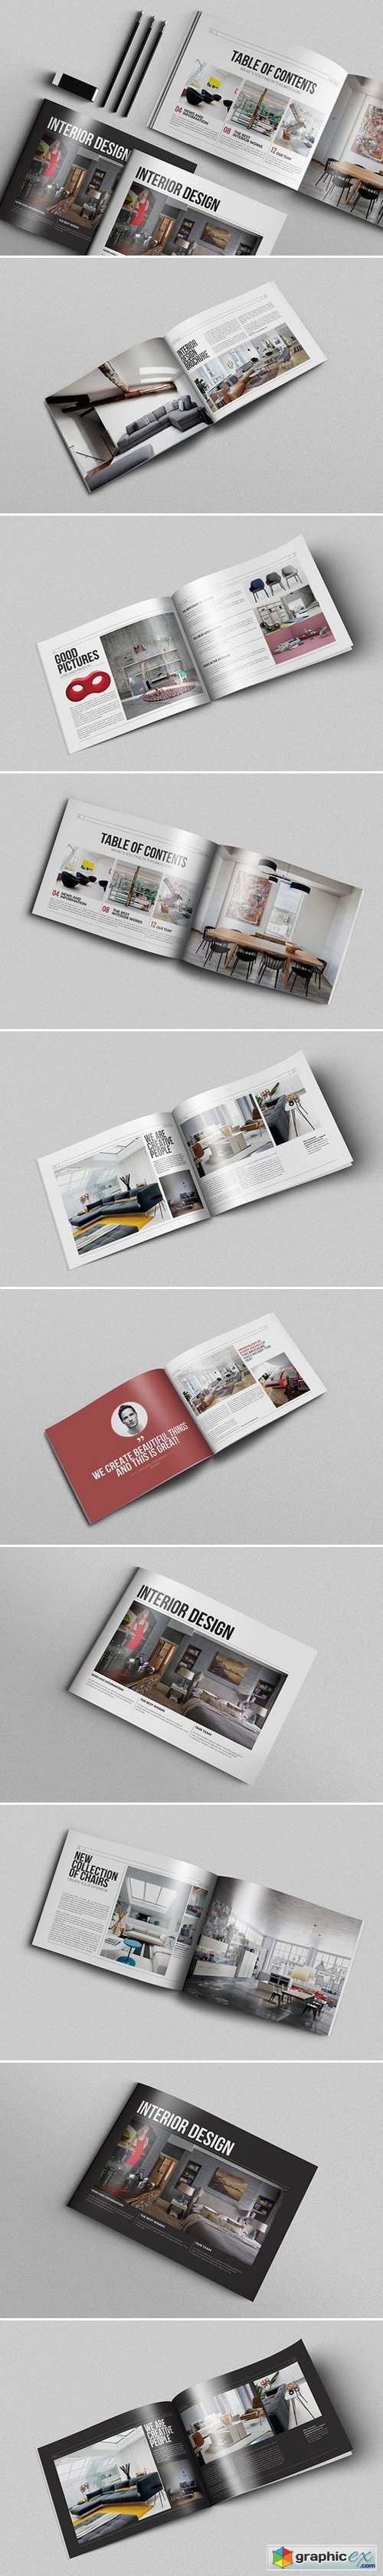 Interior Design Brochure 438269